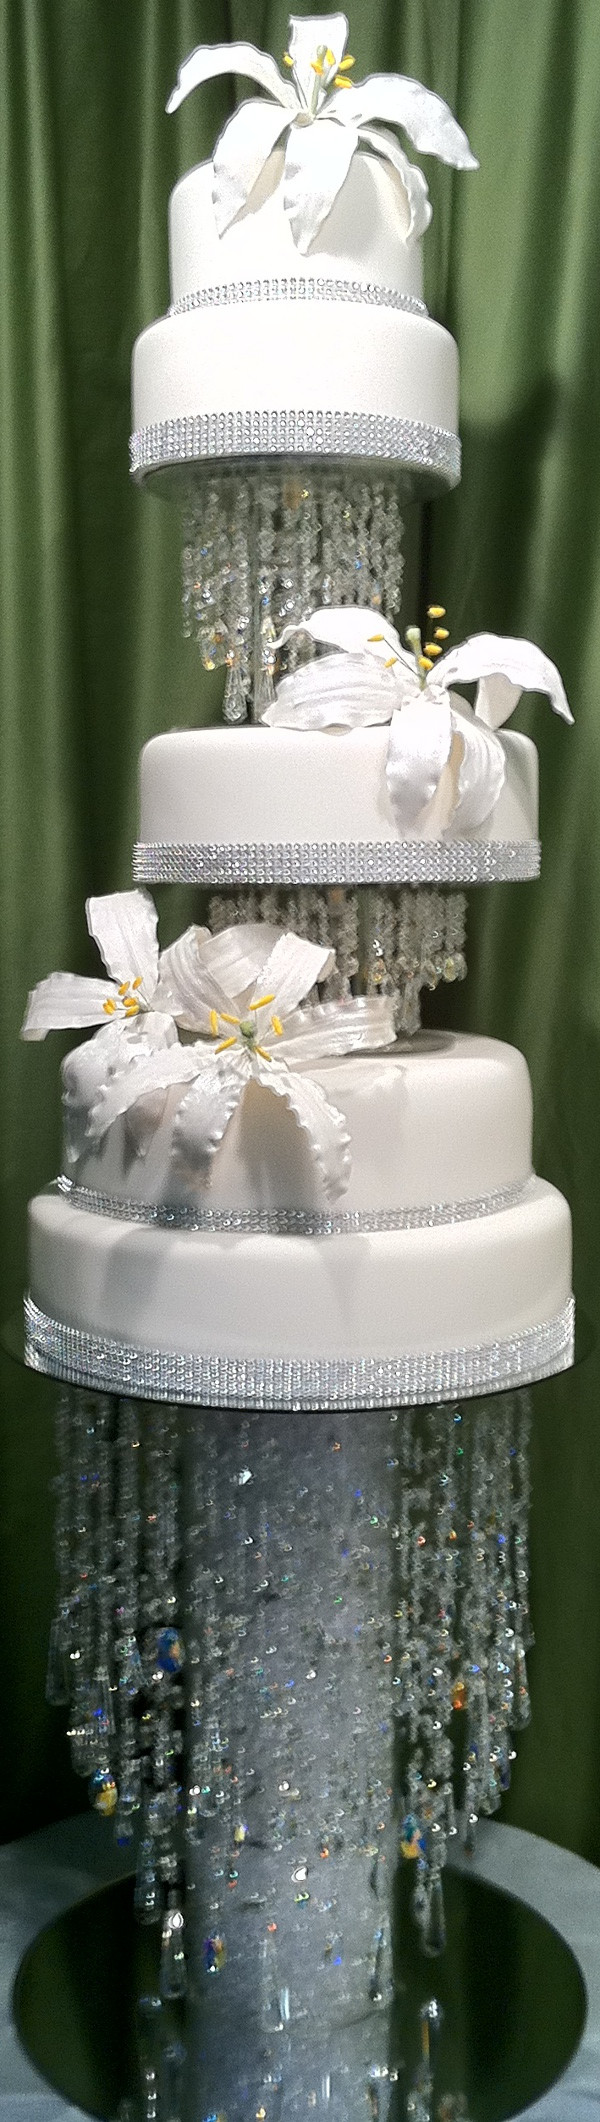 Waterfalls Wedding Cakes
 Interesting and beautiful